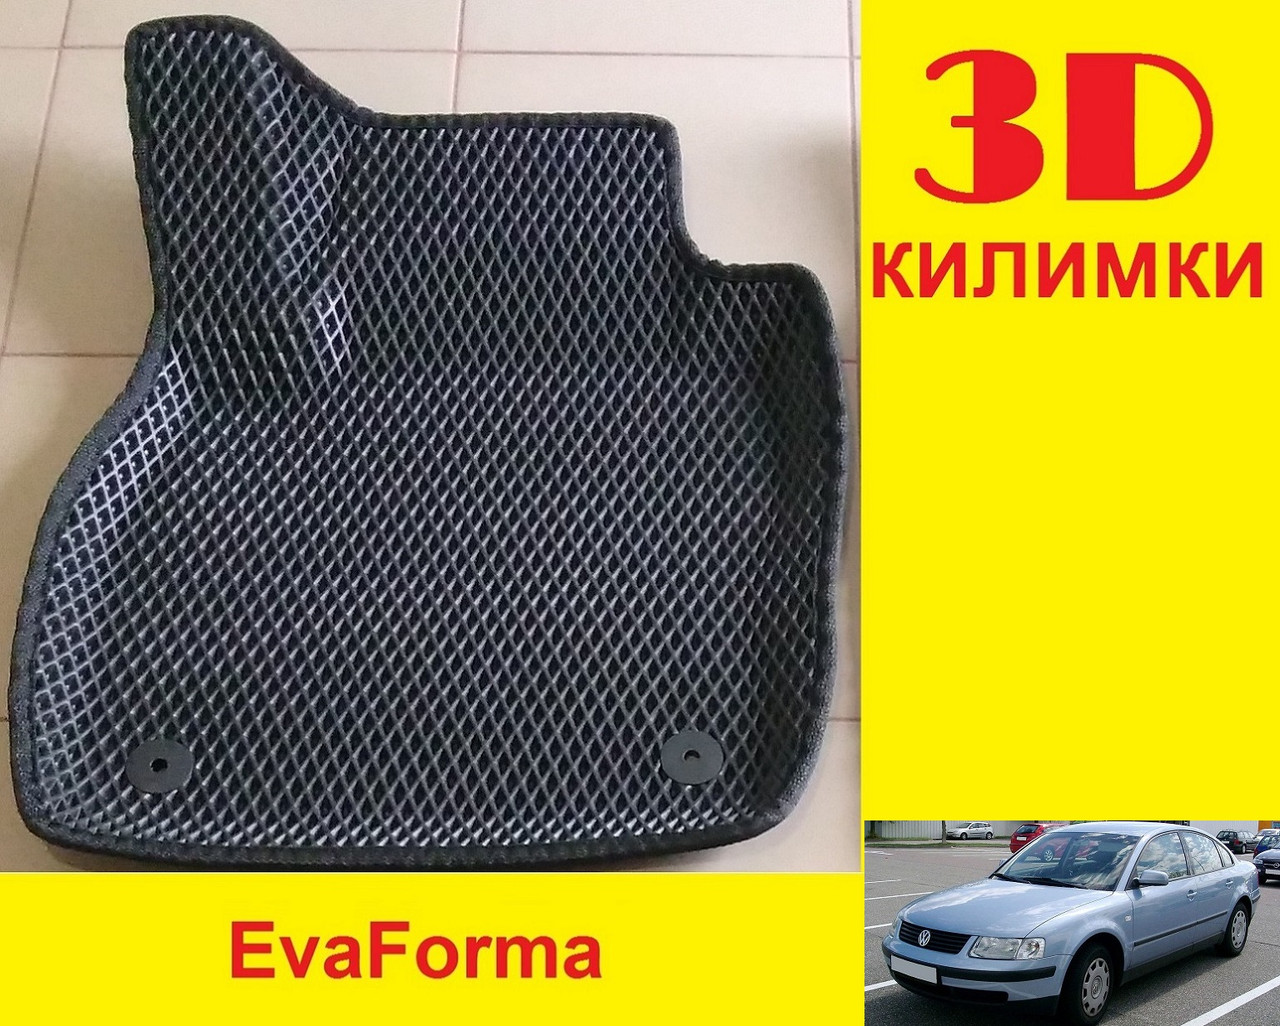 3D килимки EvaForma на  Volkswagen Passat B5 '96-05, килимки ЕВА